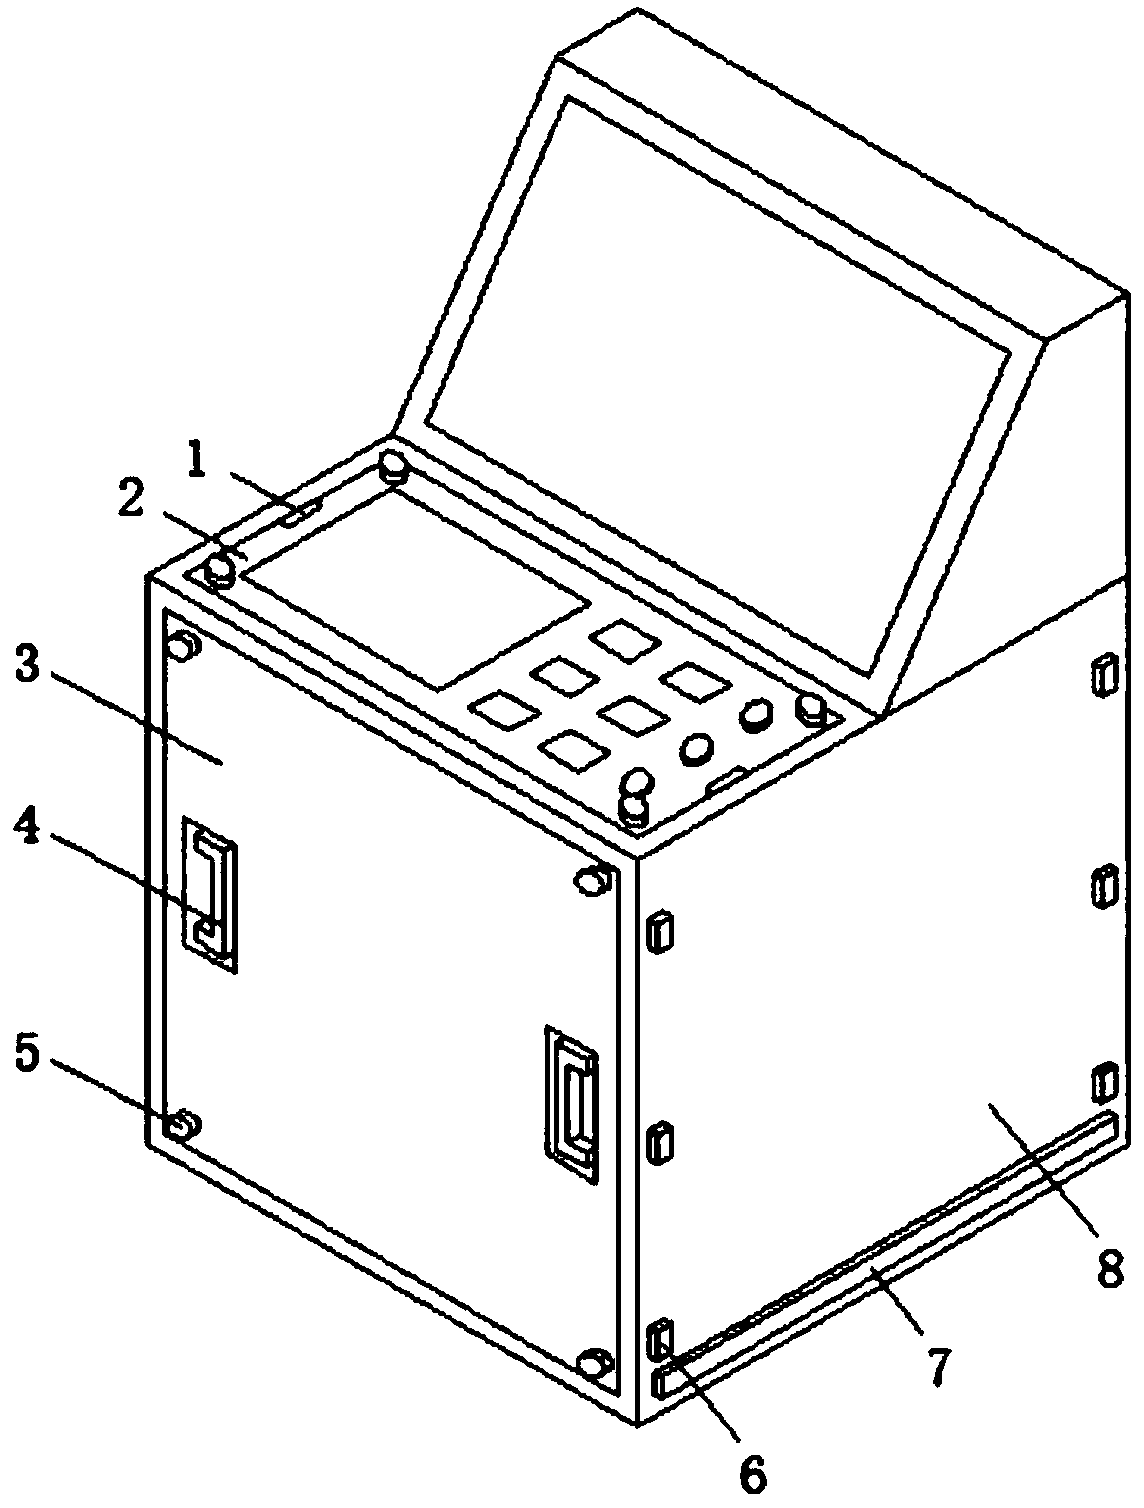 Main server of numerical control machine tool